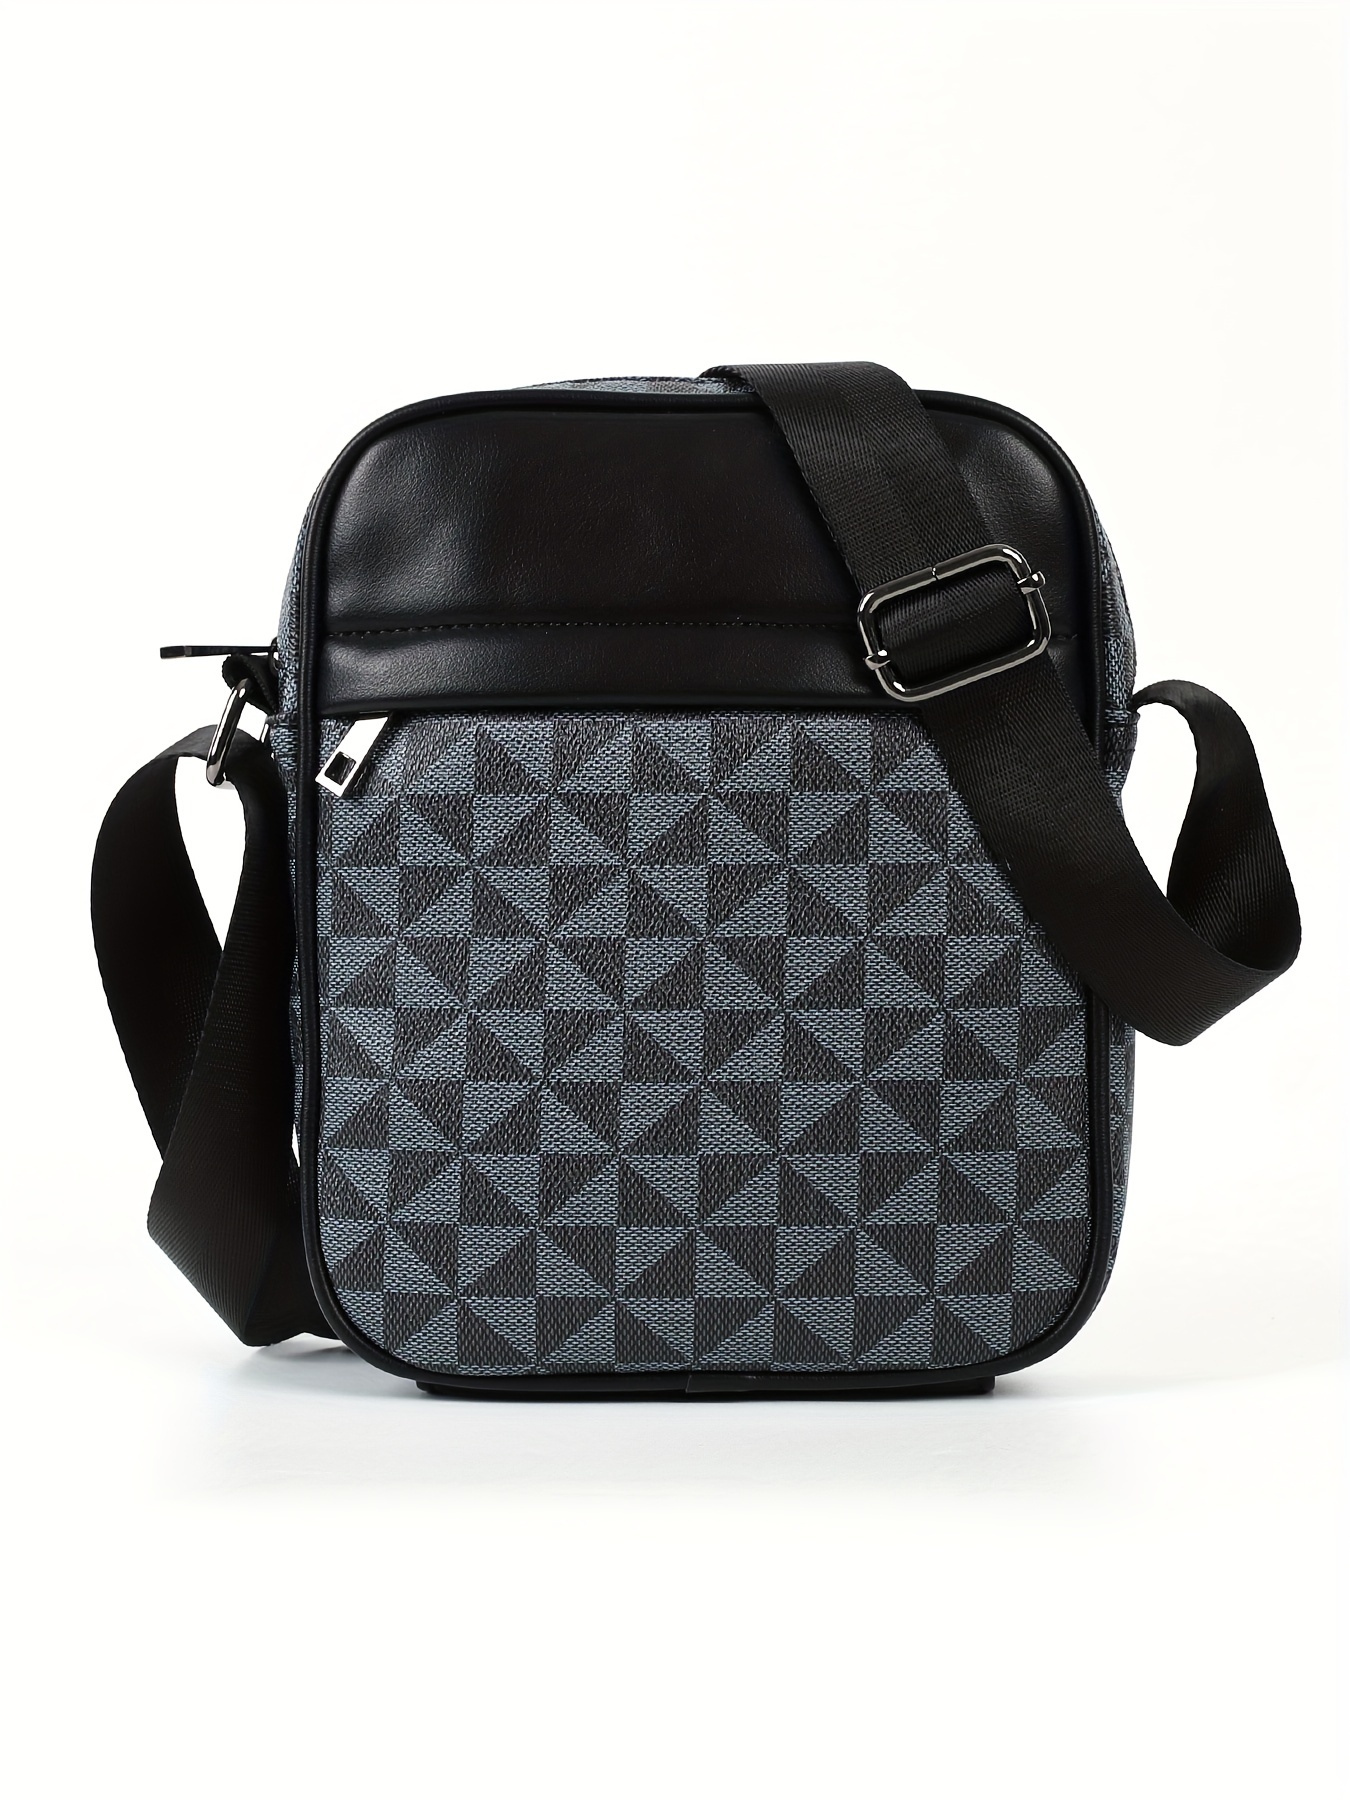 Men's Casual Vintage Checkered Crossbody Bag, Fashion Shoulder Bag